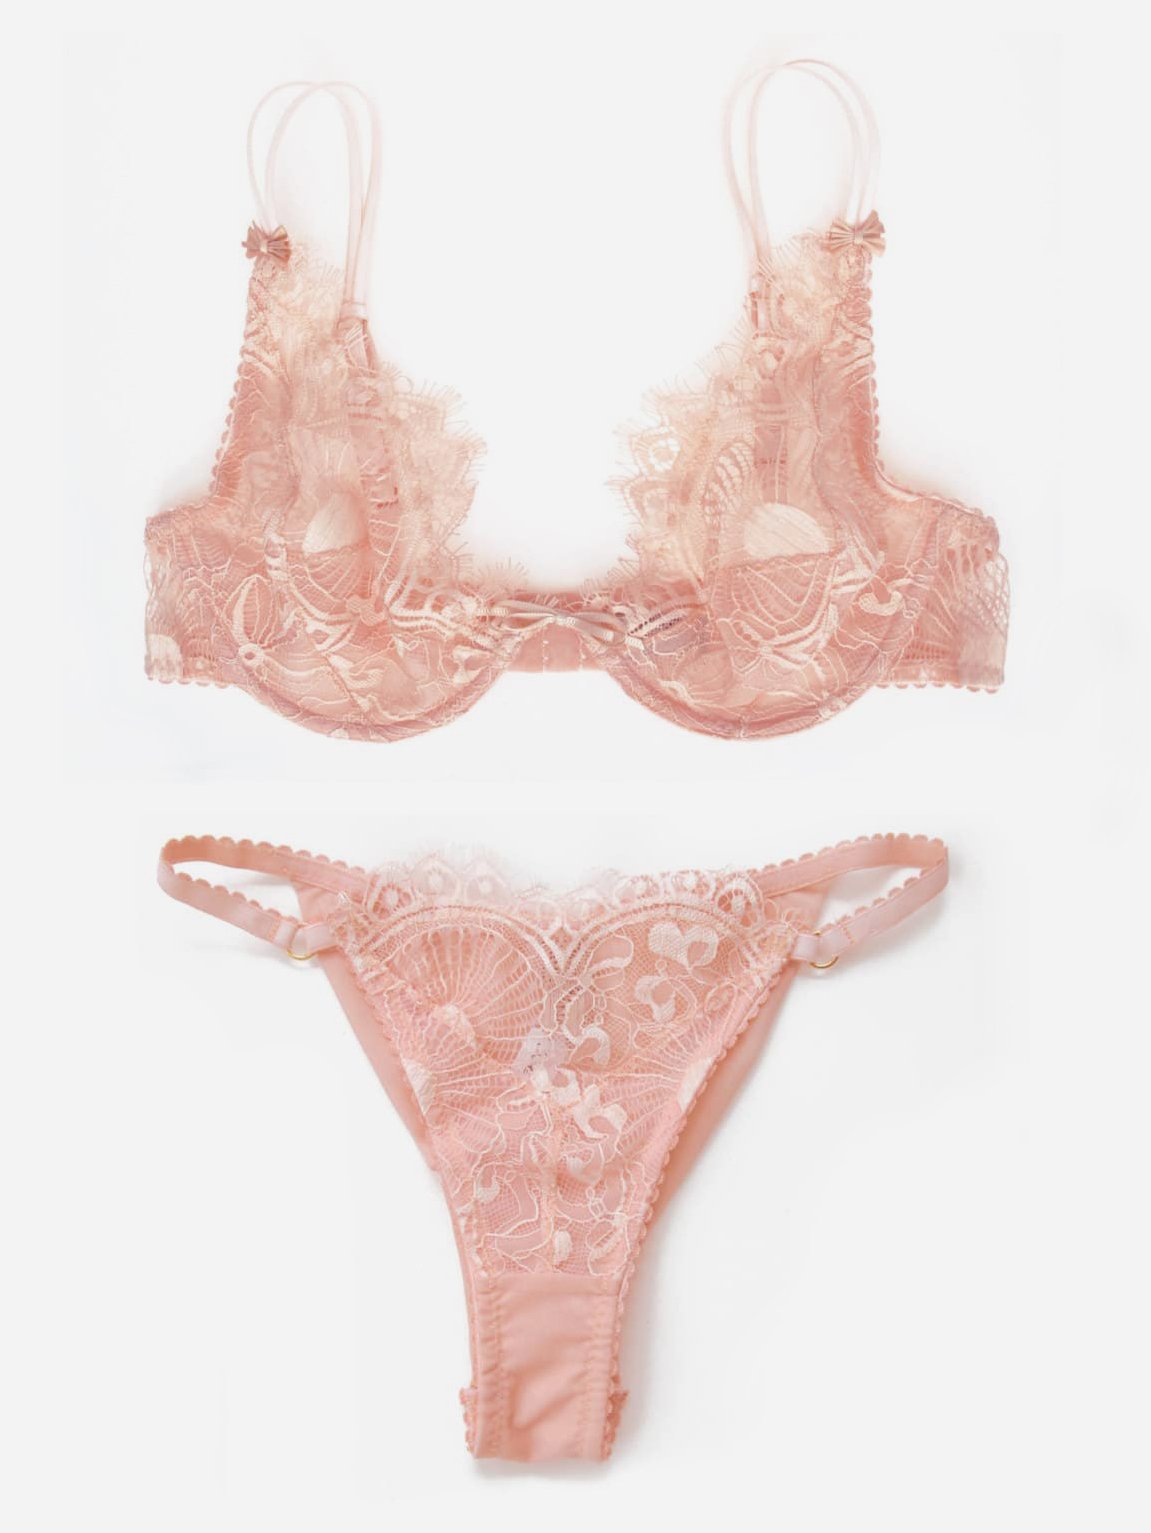 https://mariannagiordana.com/wp-content/uploads/2018/11/pink-lace-lingerie-set-bespoke-order-in-france.jpeg